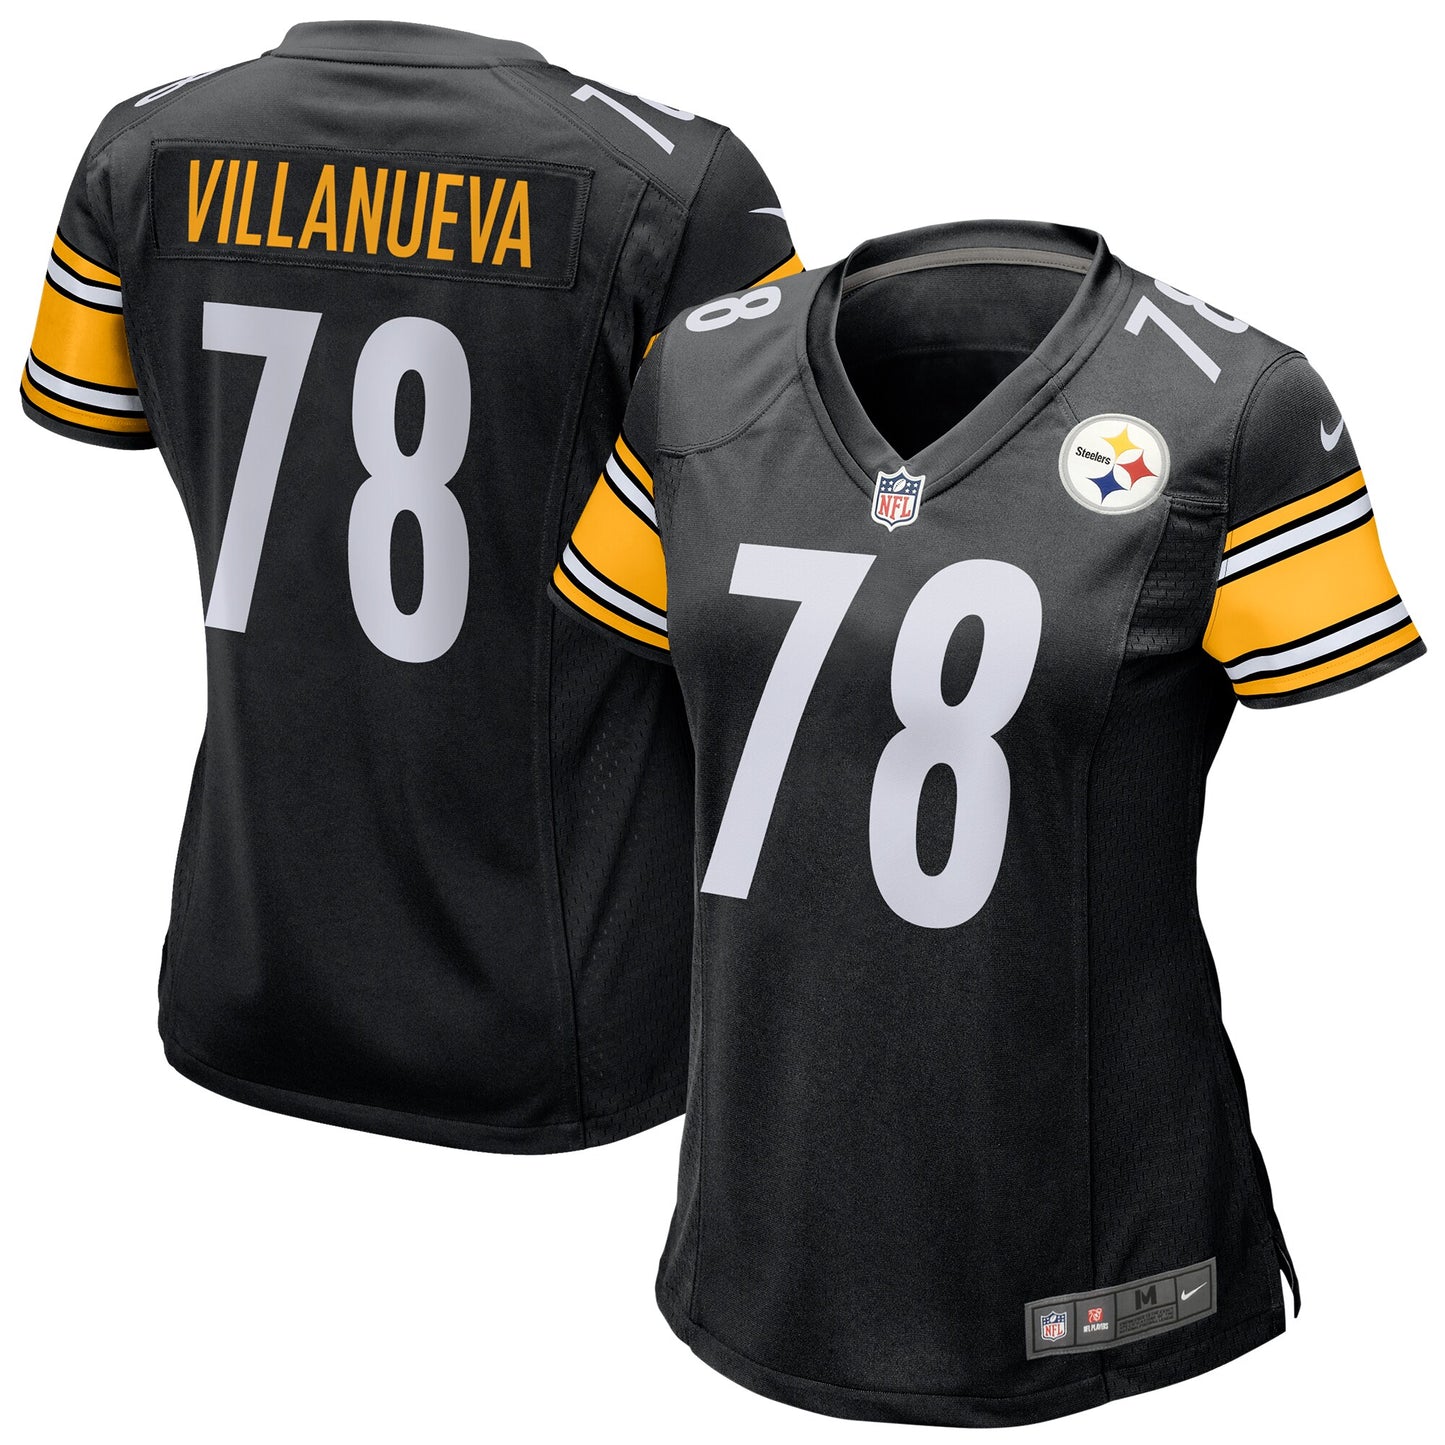 Alejandro Villanueva Pittsburgh Steelers Nike Women's Game Jersey - Black